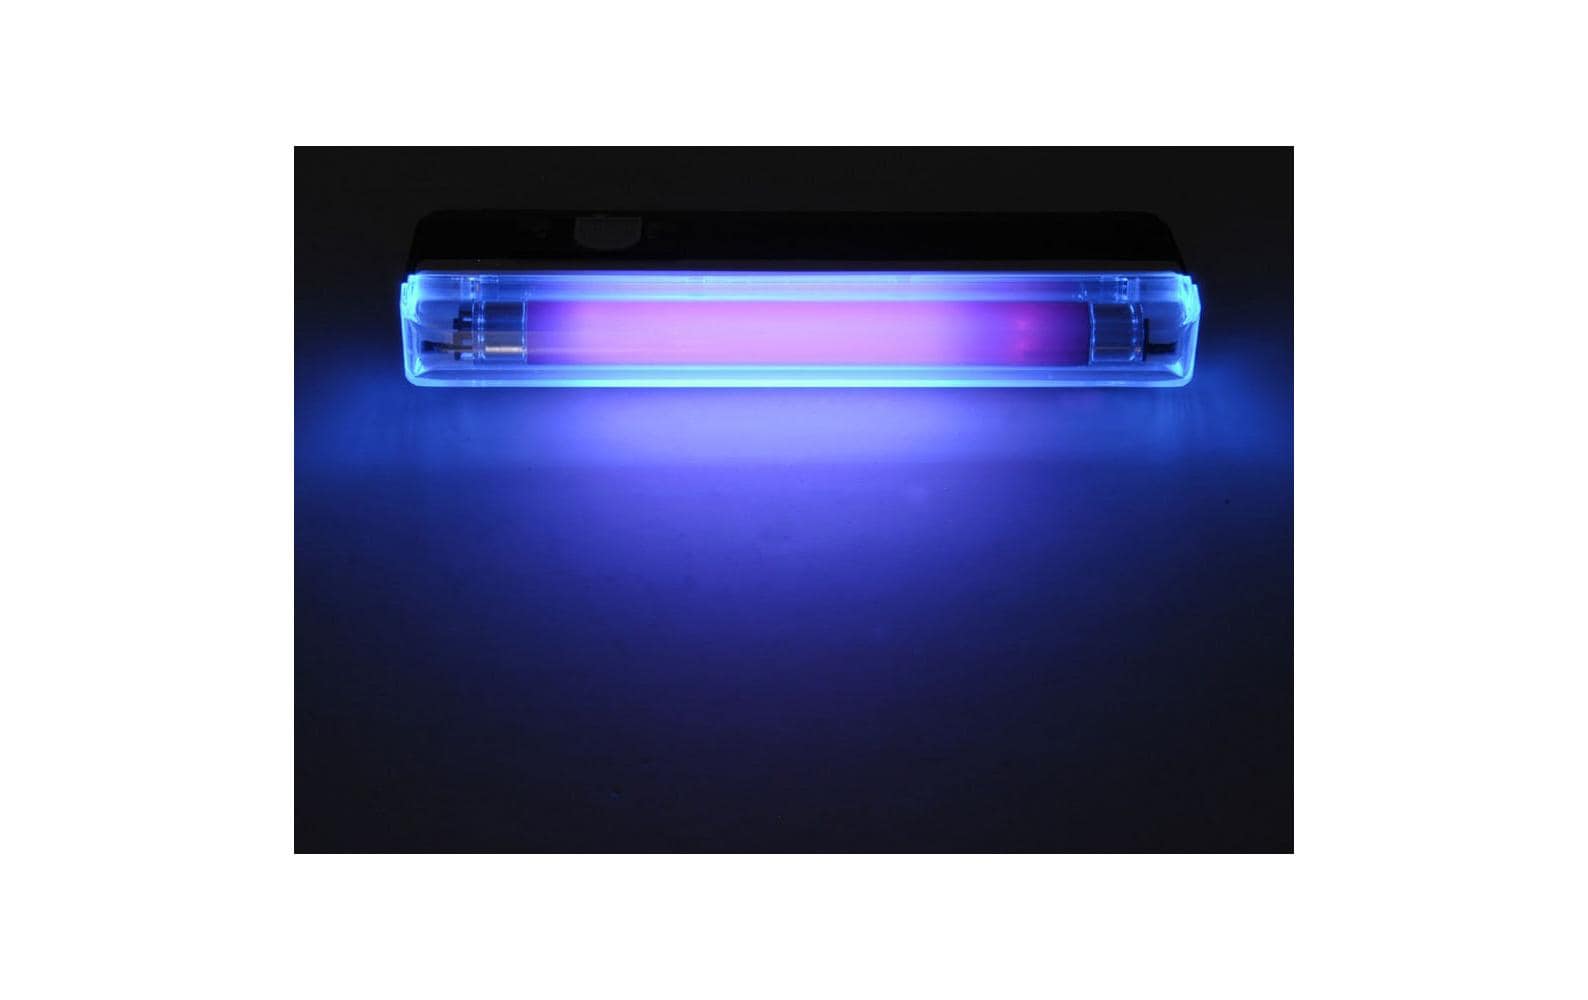 BeamZ UV-Taschenlampe BUV15TL